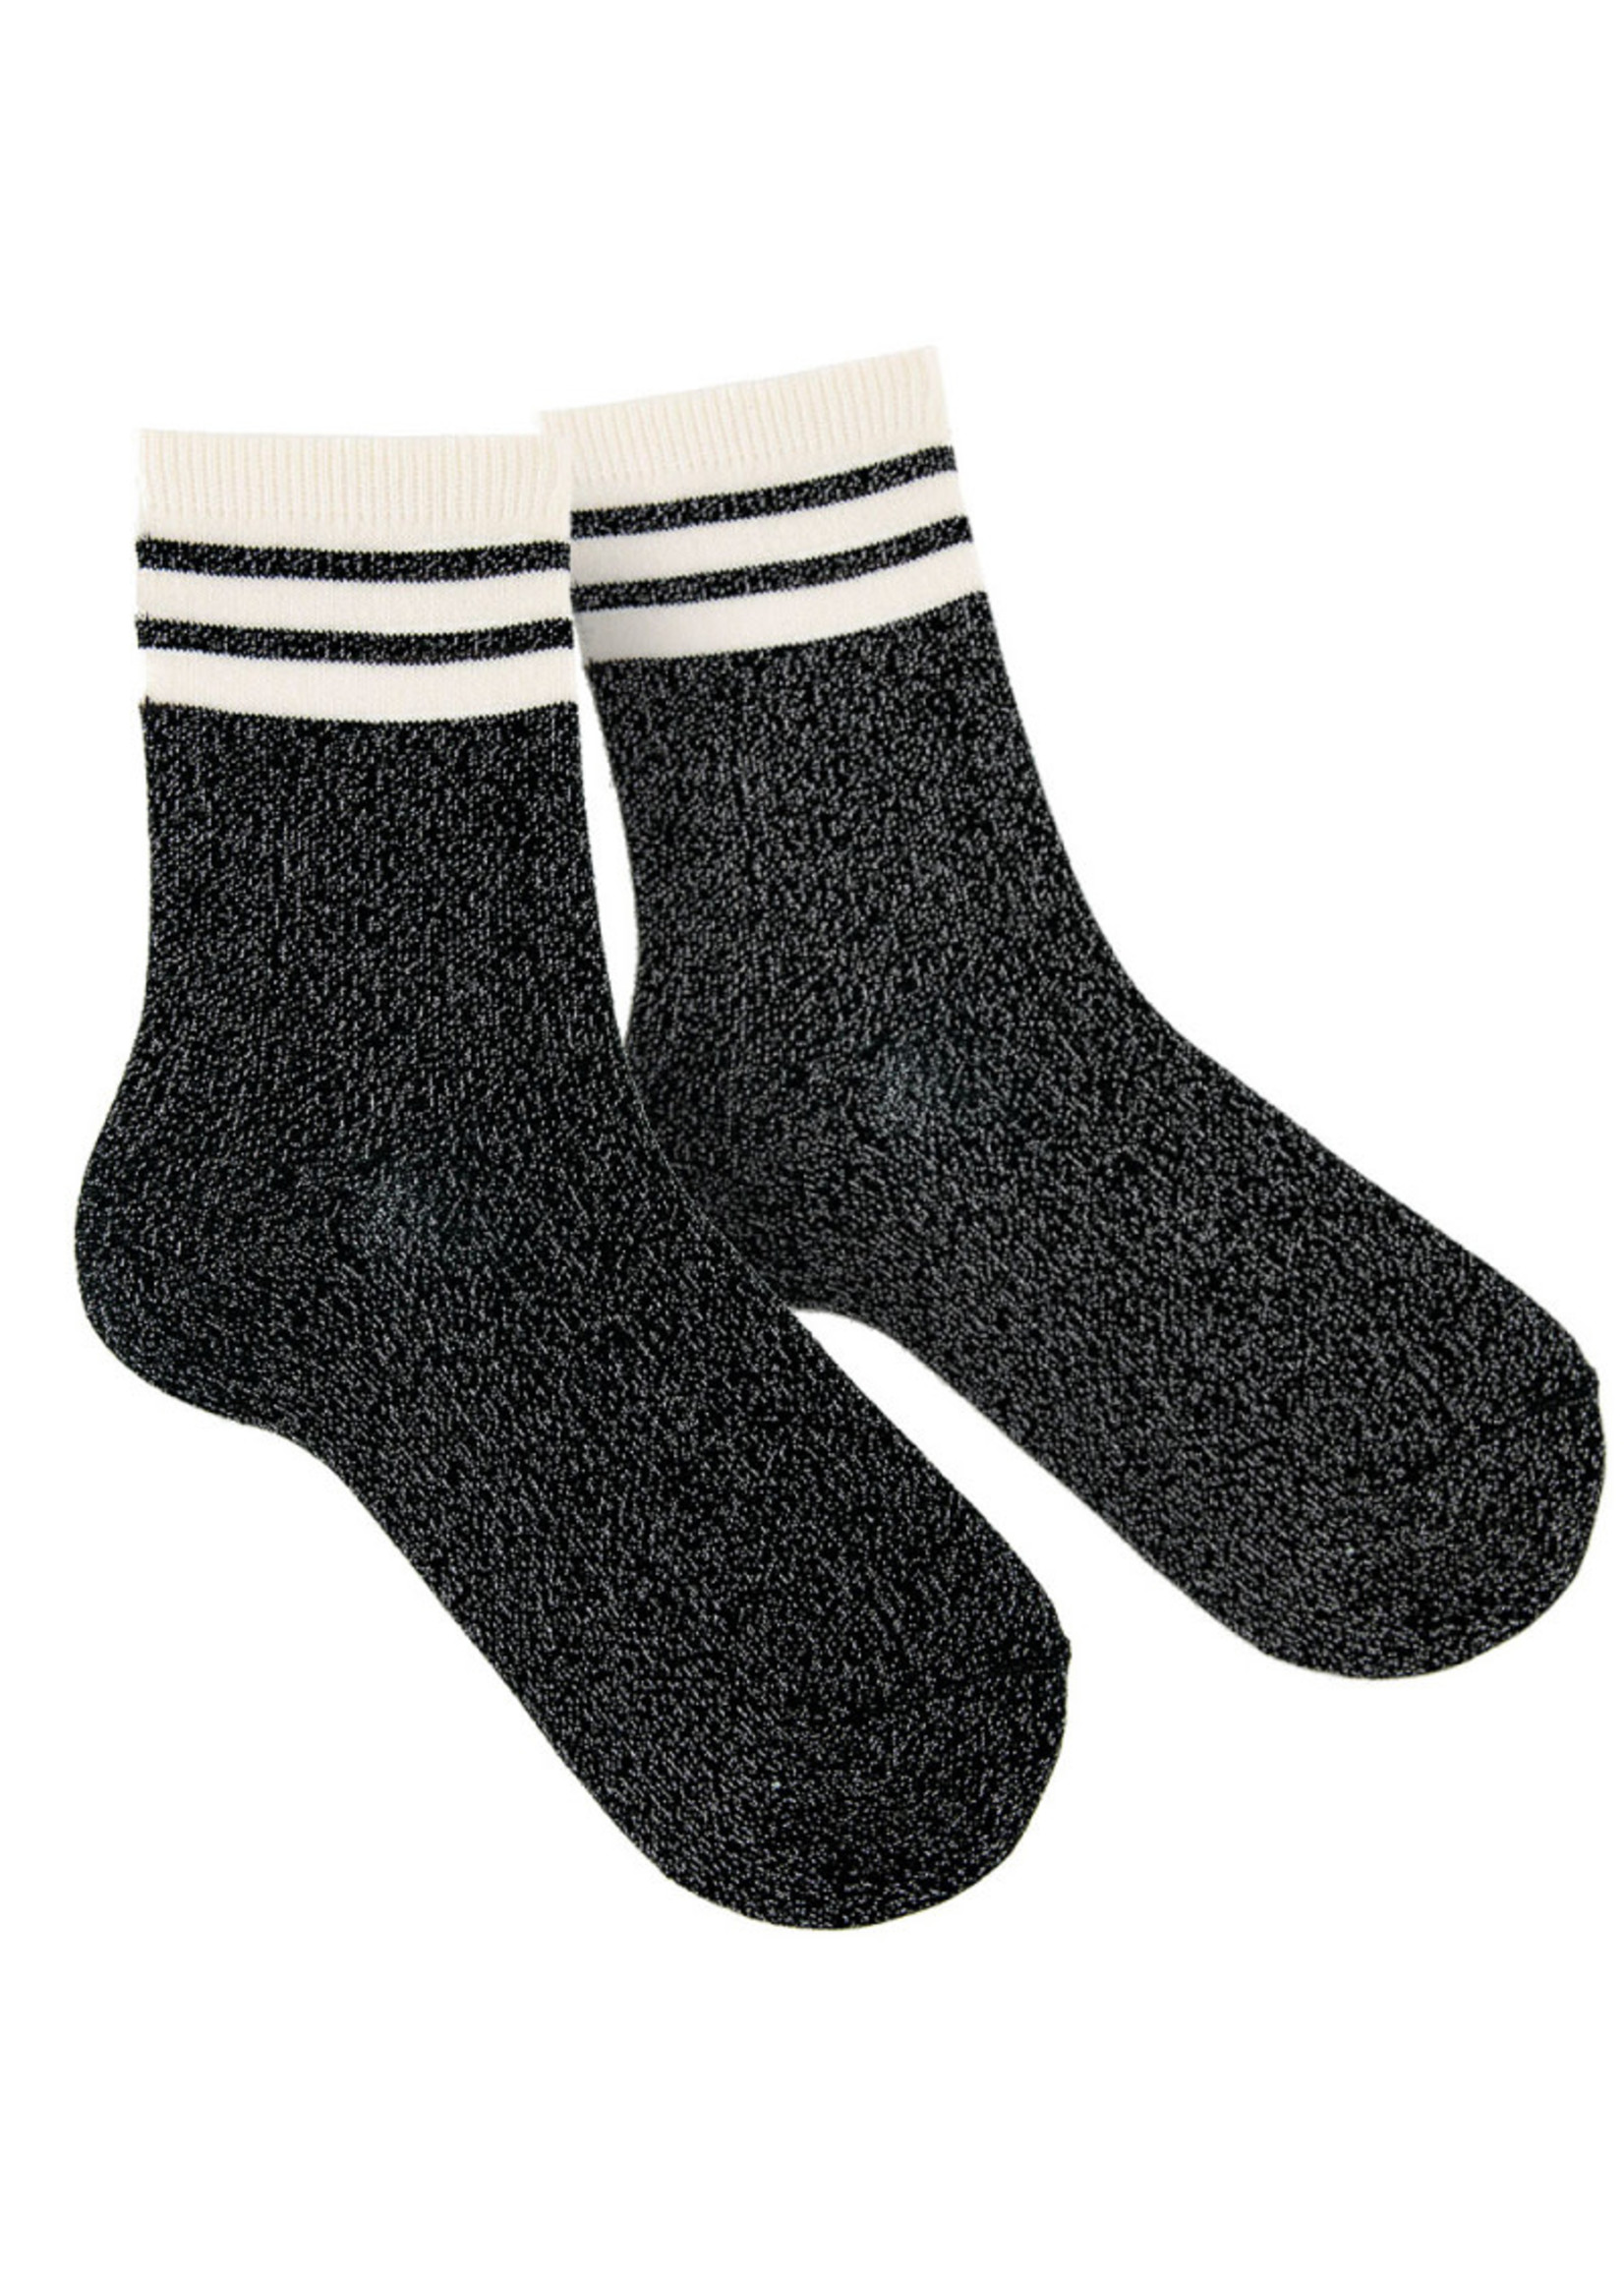 Condor Socks Casual Stripes with Glitter - Black